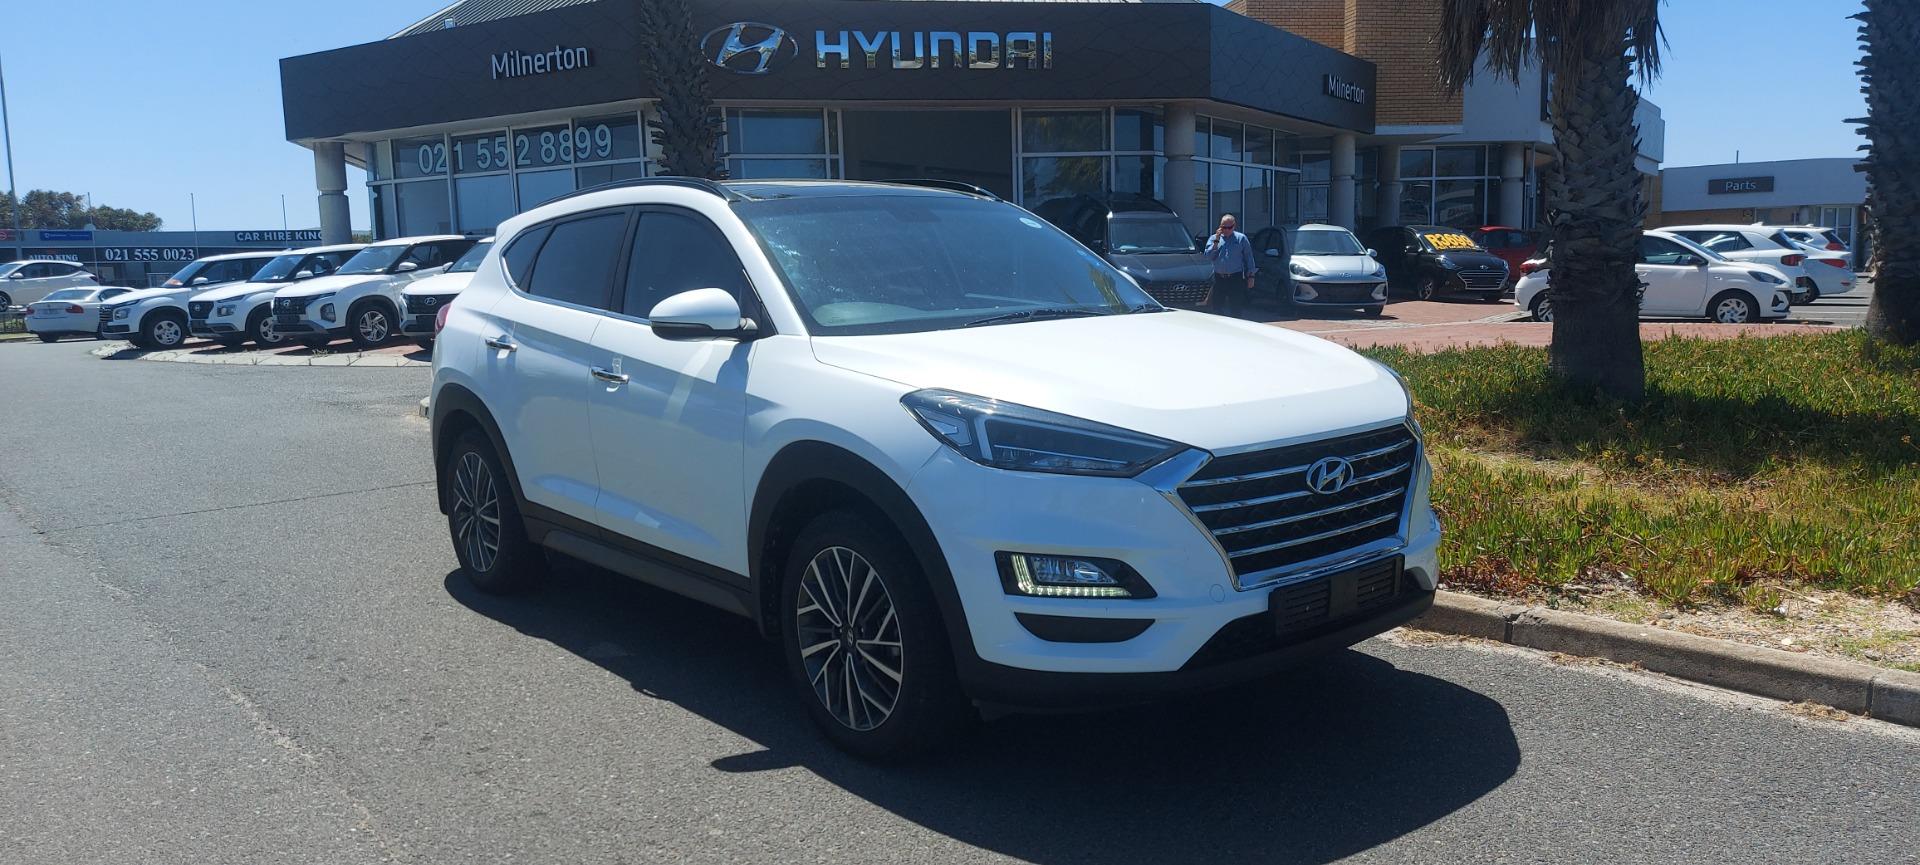 2020 Hyundai Tucson 2.0 Elite For Sale